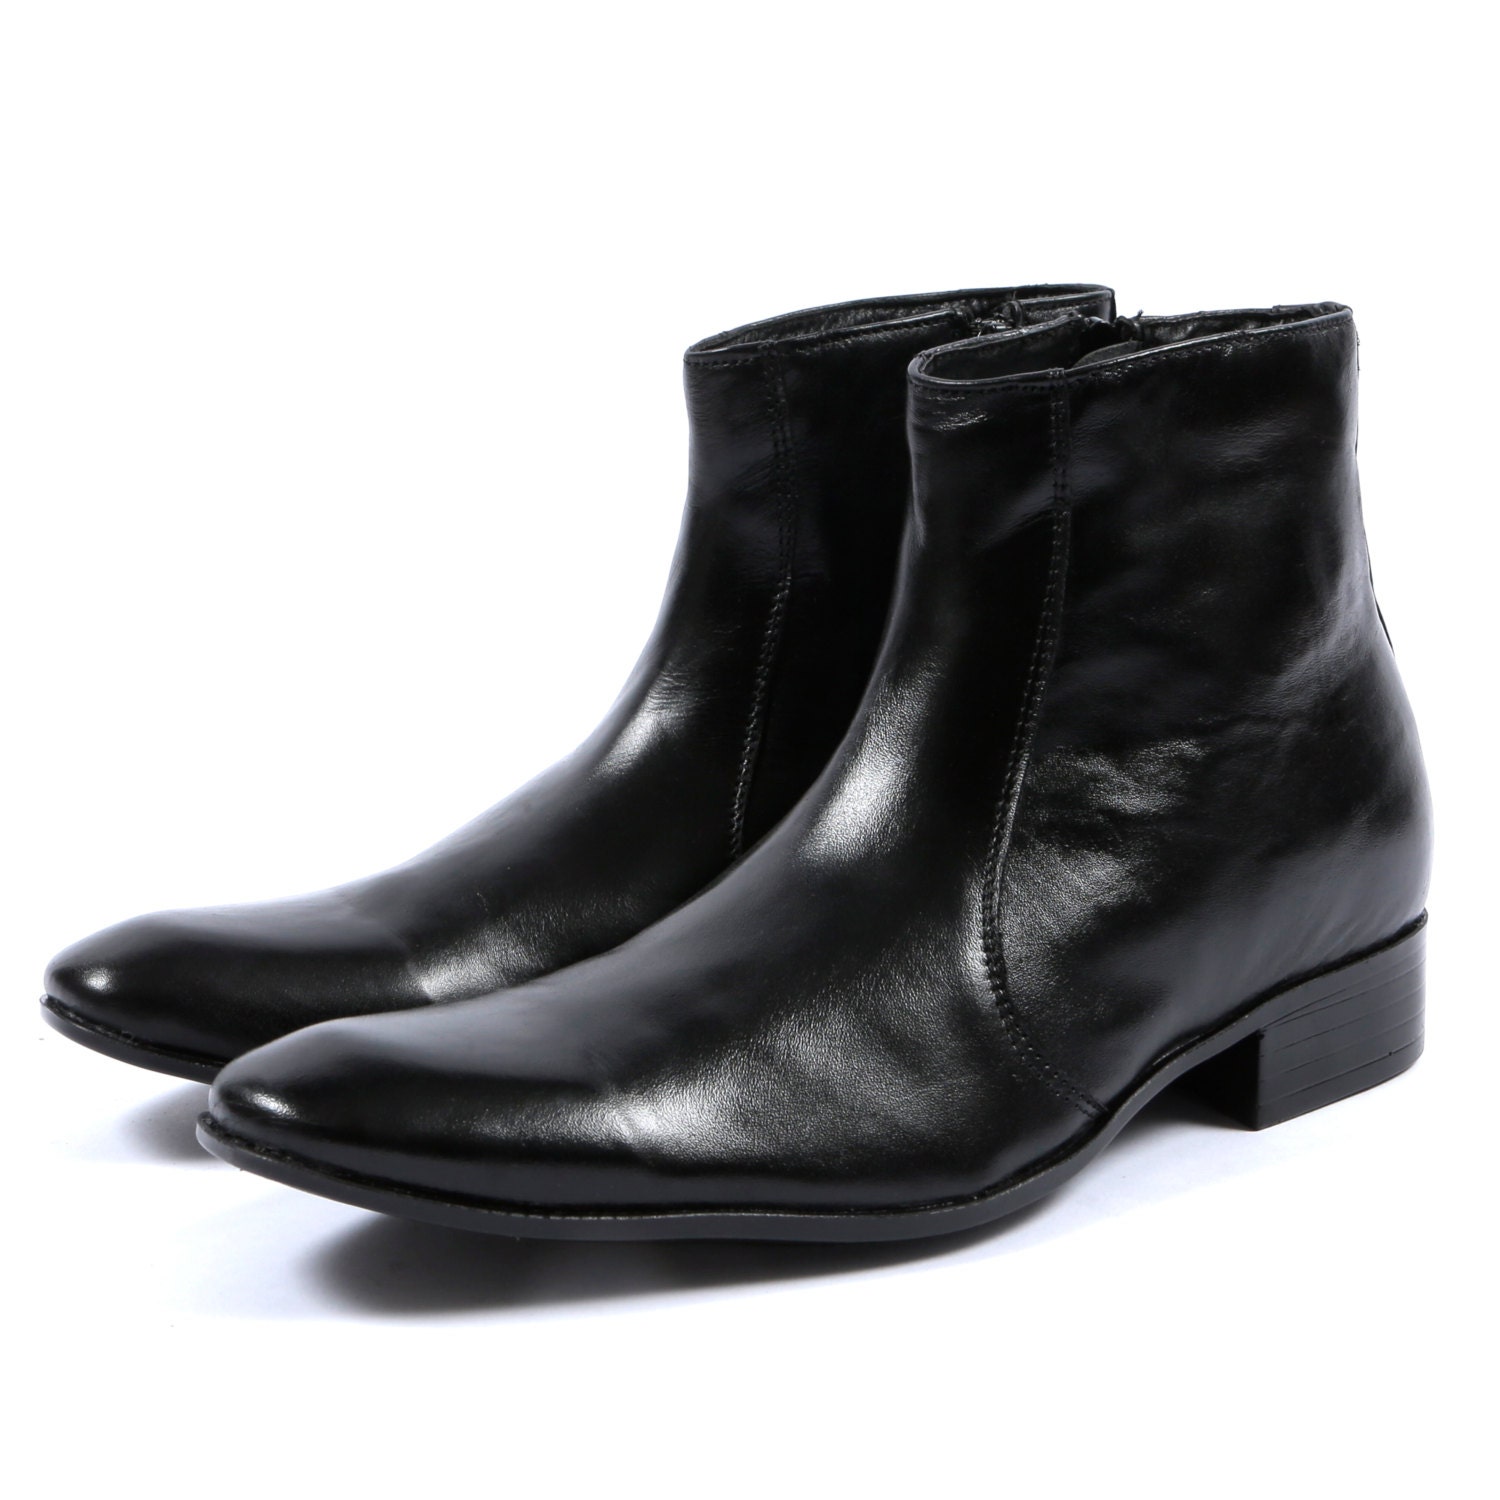 Aspele Black Leather Chelsea Boots - Etsy